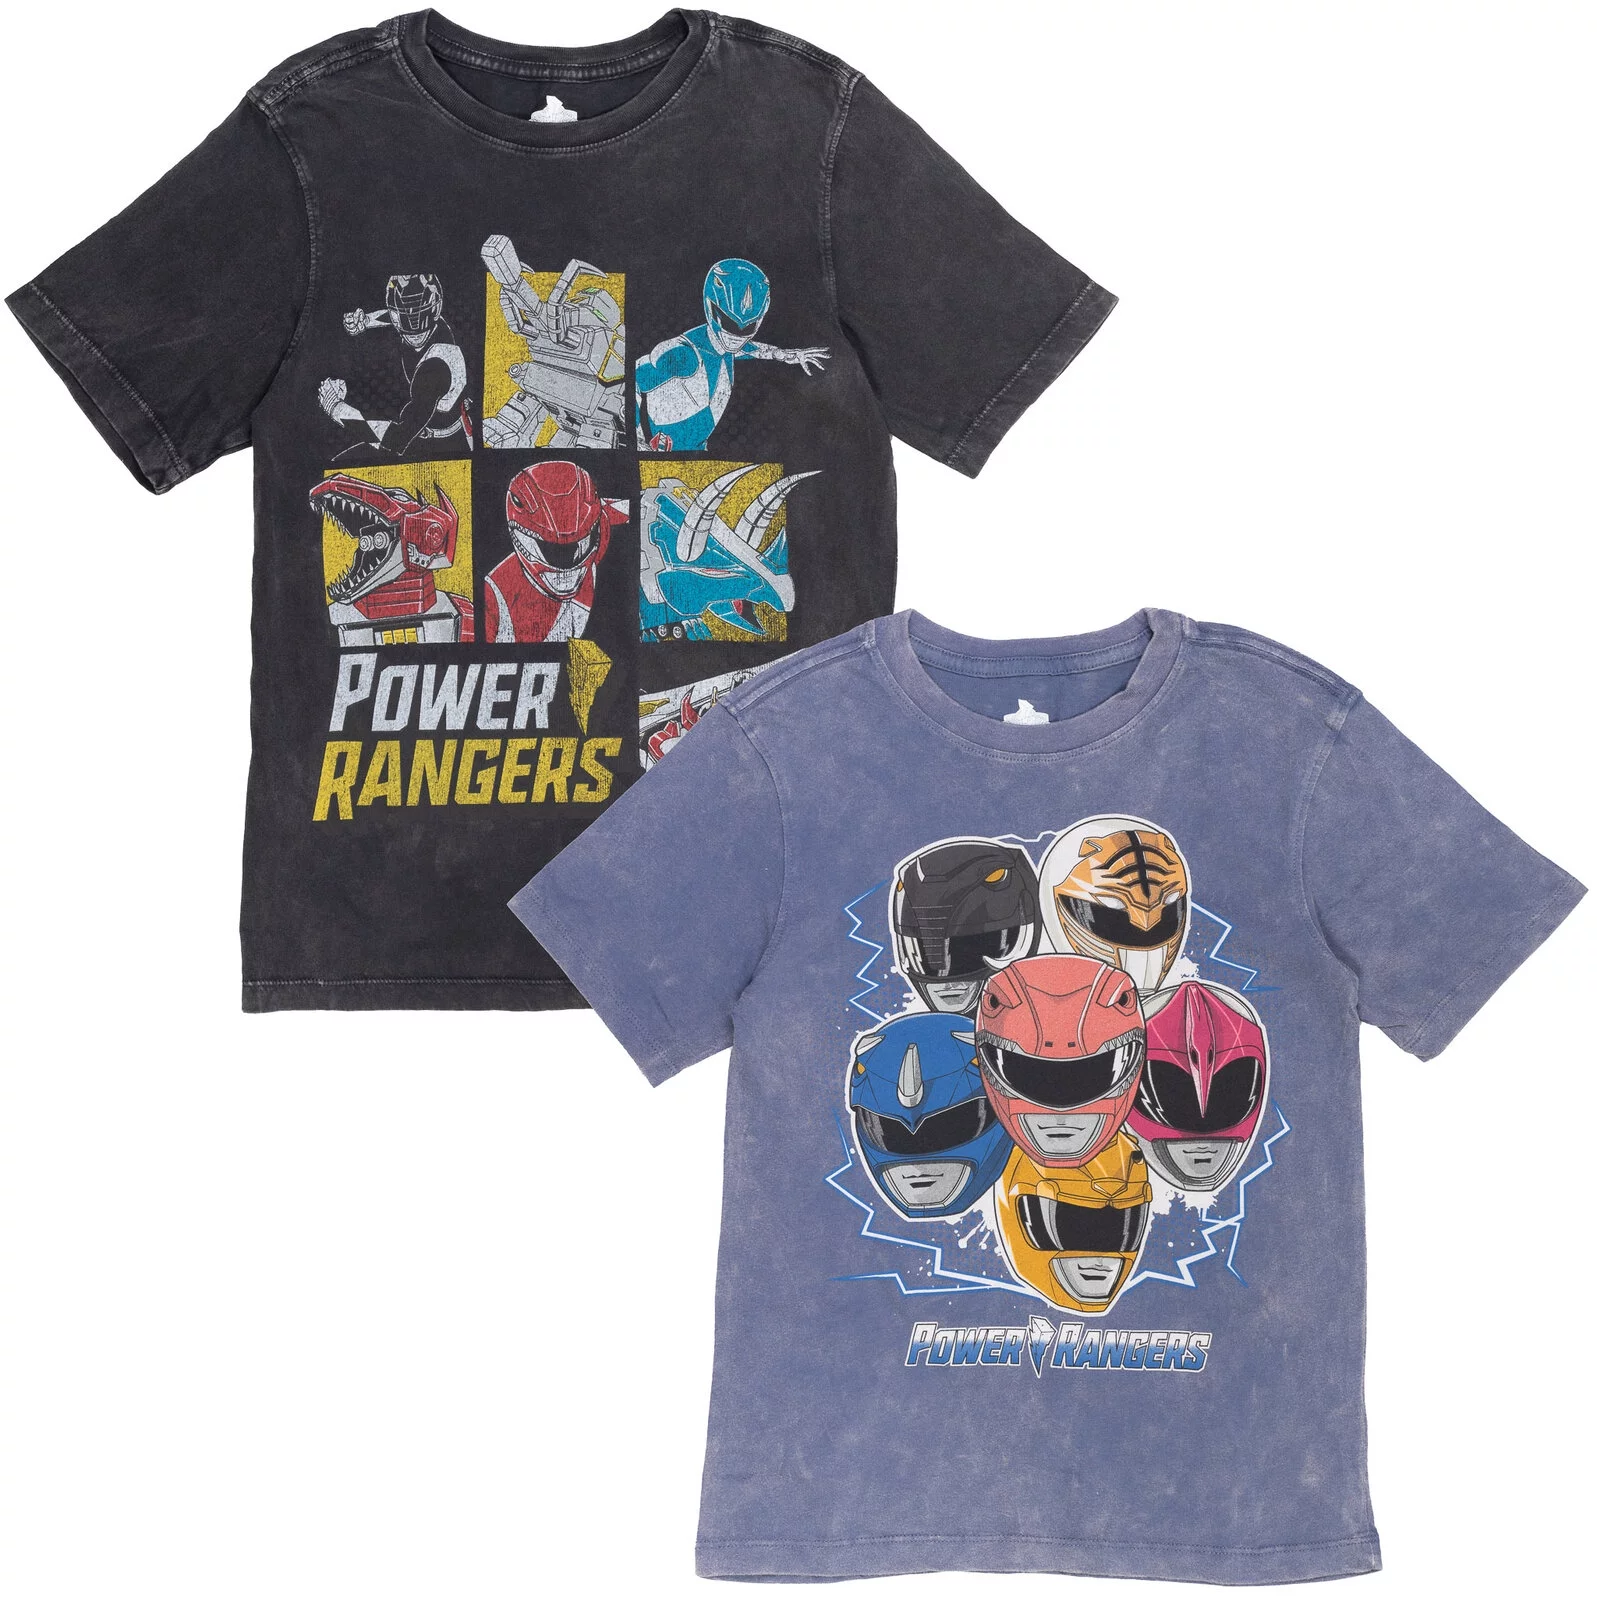 Power Rangers Big Boys 2 Pack T-Shirts Little Kid to Big